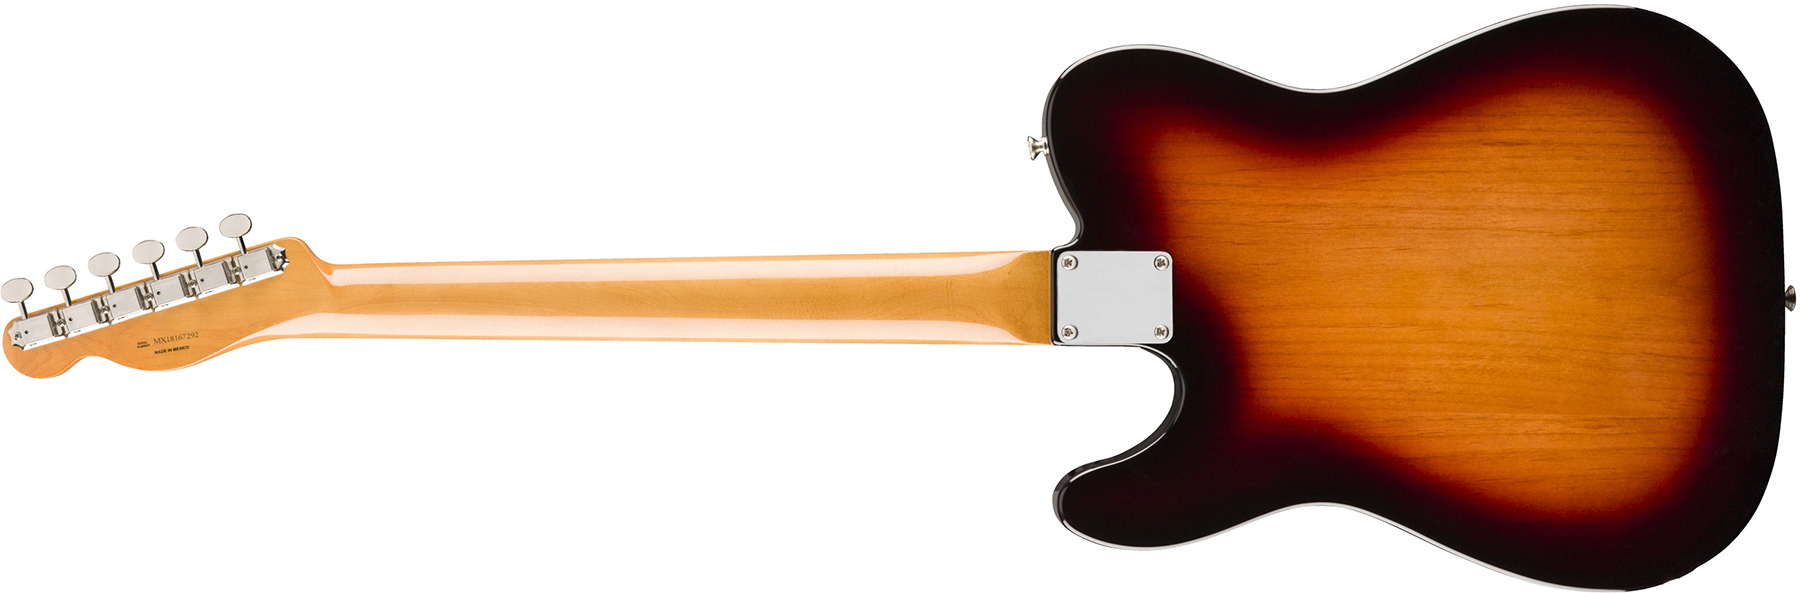 Fender Tele 60s Bigsby Vintera Vintage Mex Pf - 3-color Sunburst - Tel shape electric guitar - Variation 1